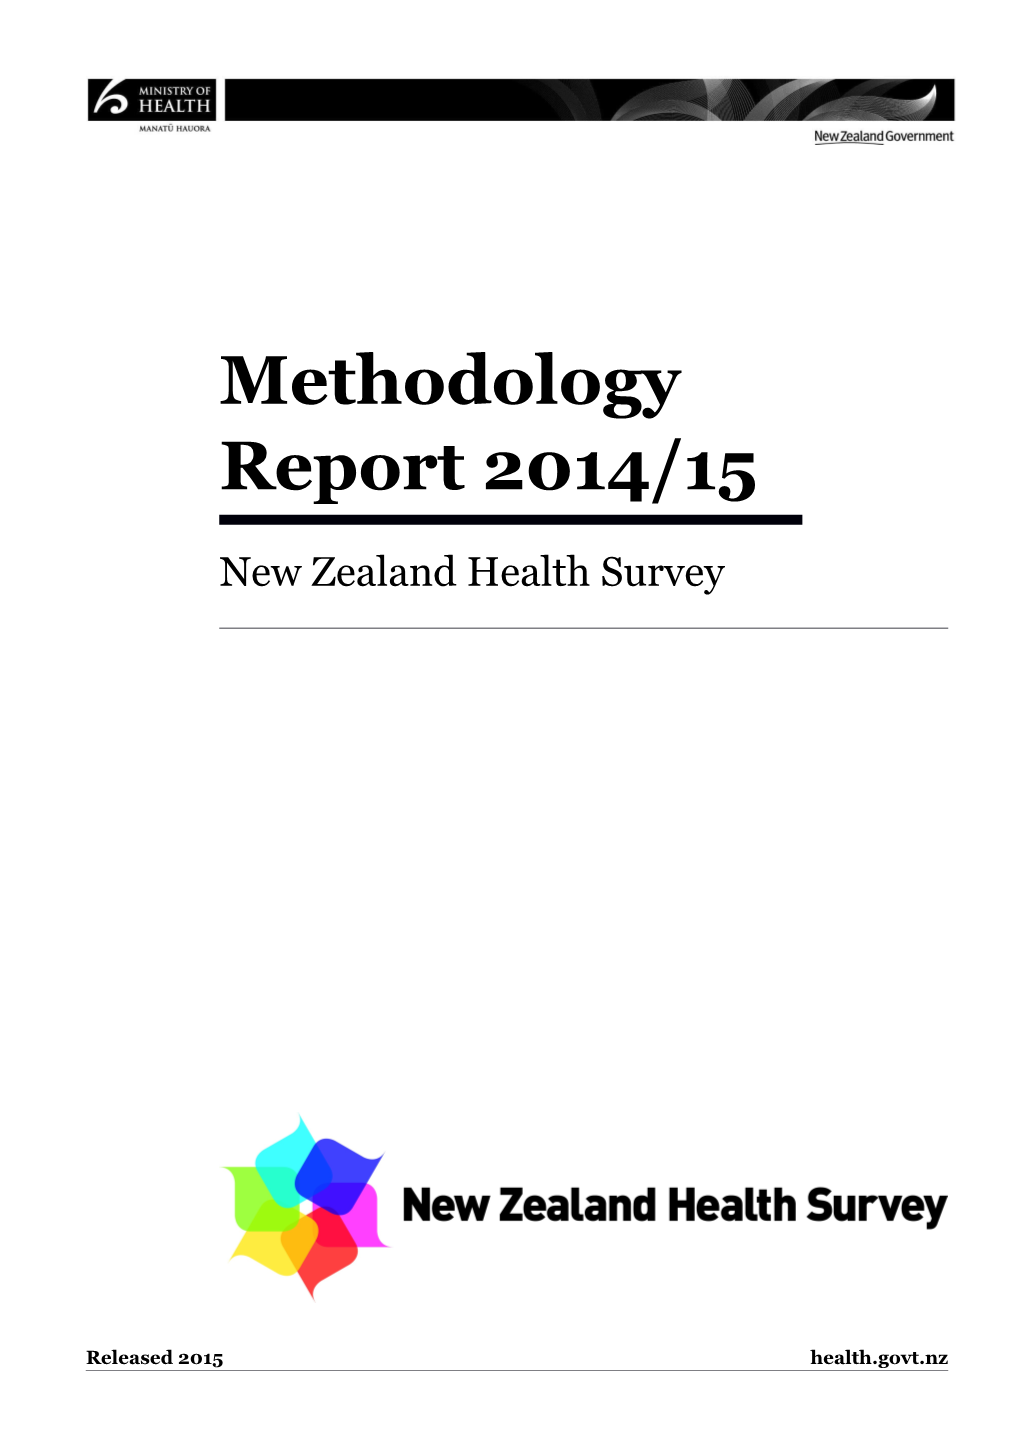 Methodology Report 2014/15: New Zealand Health Survey